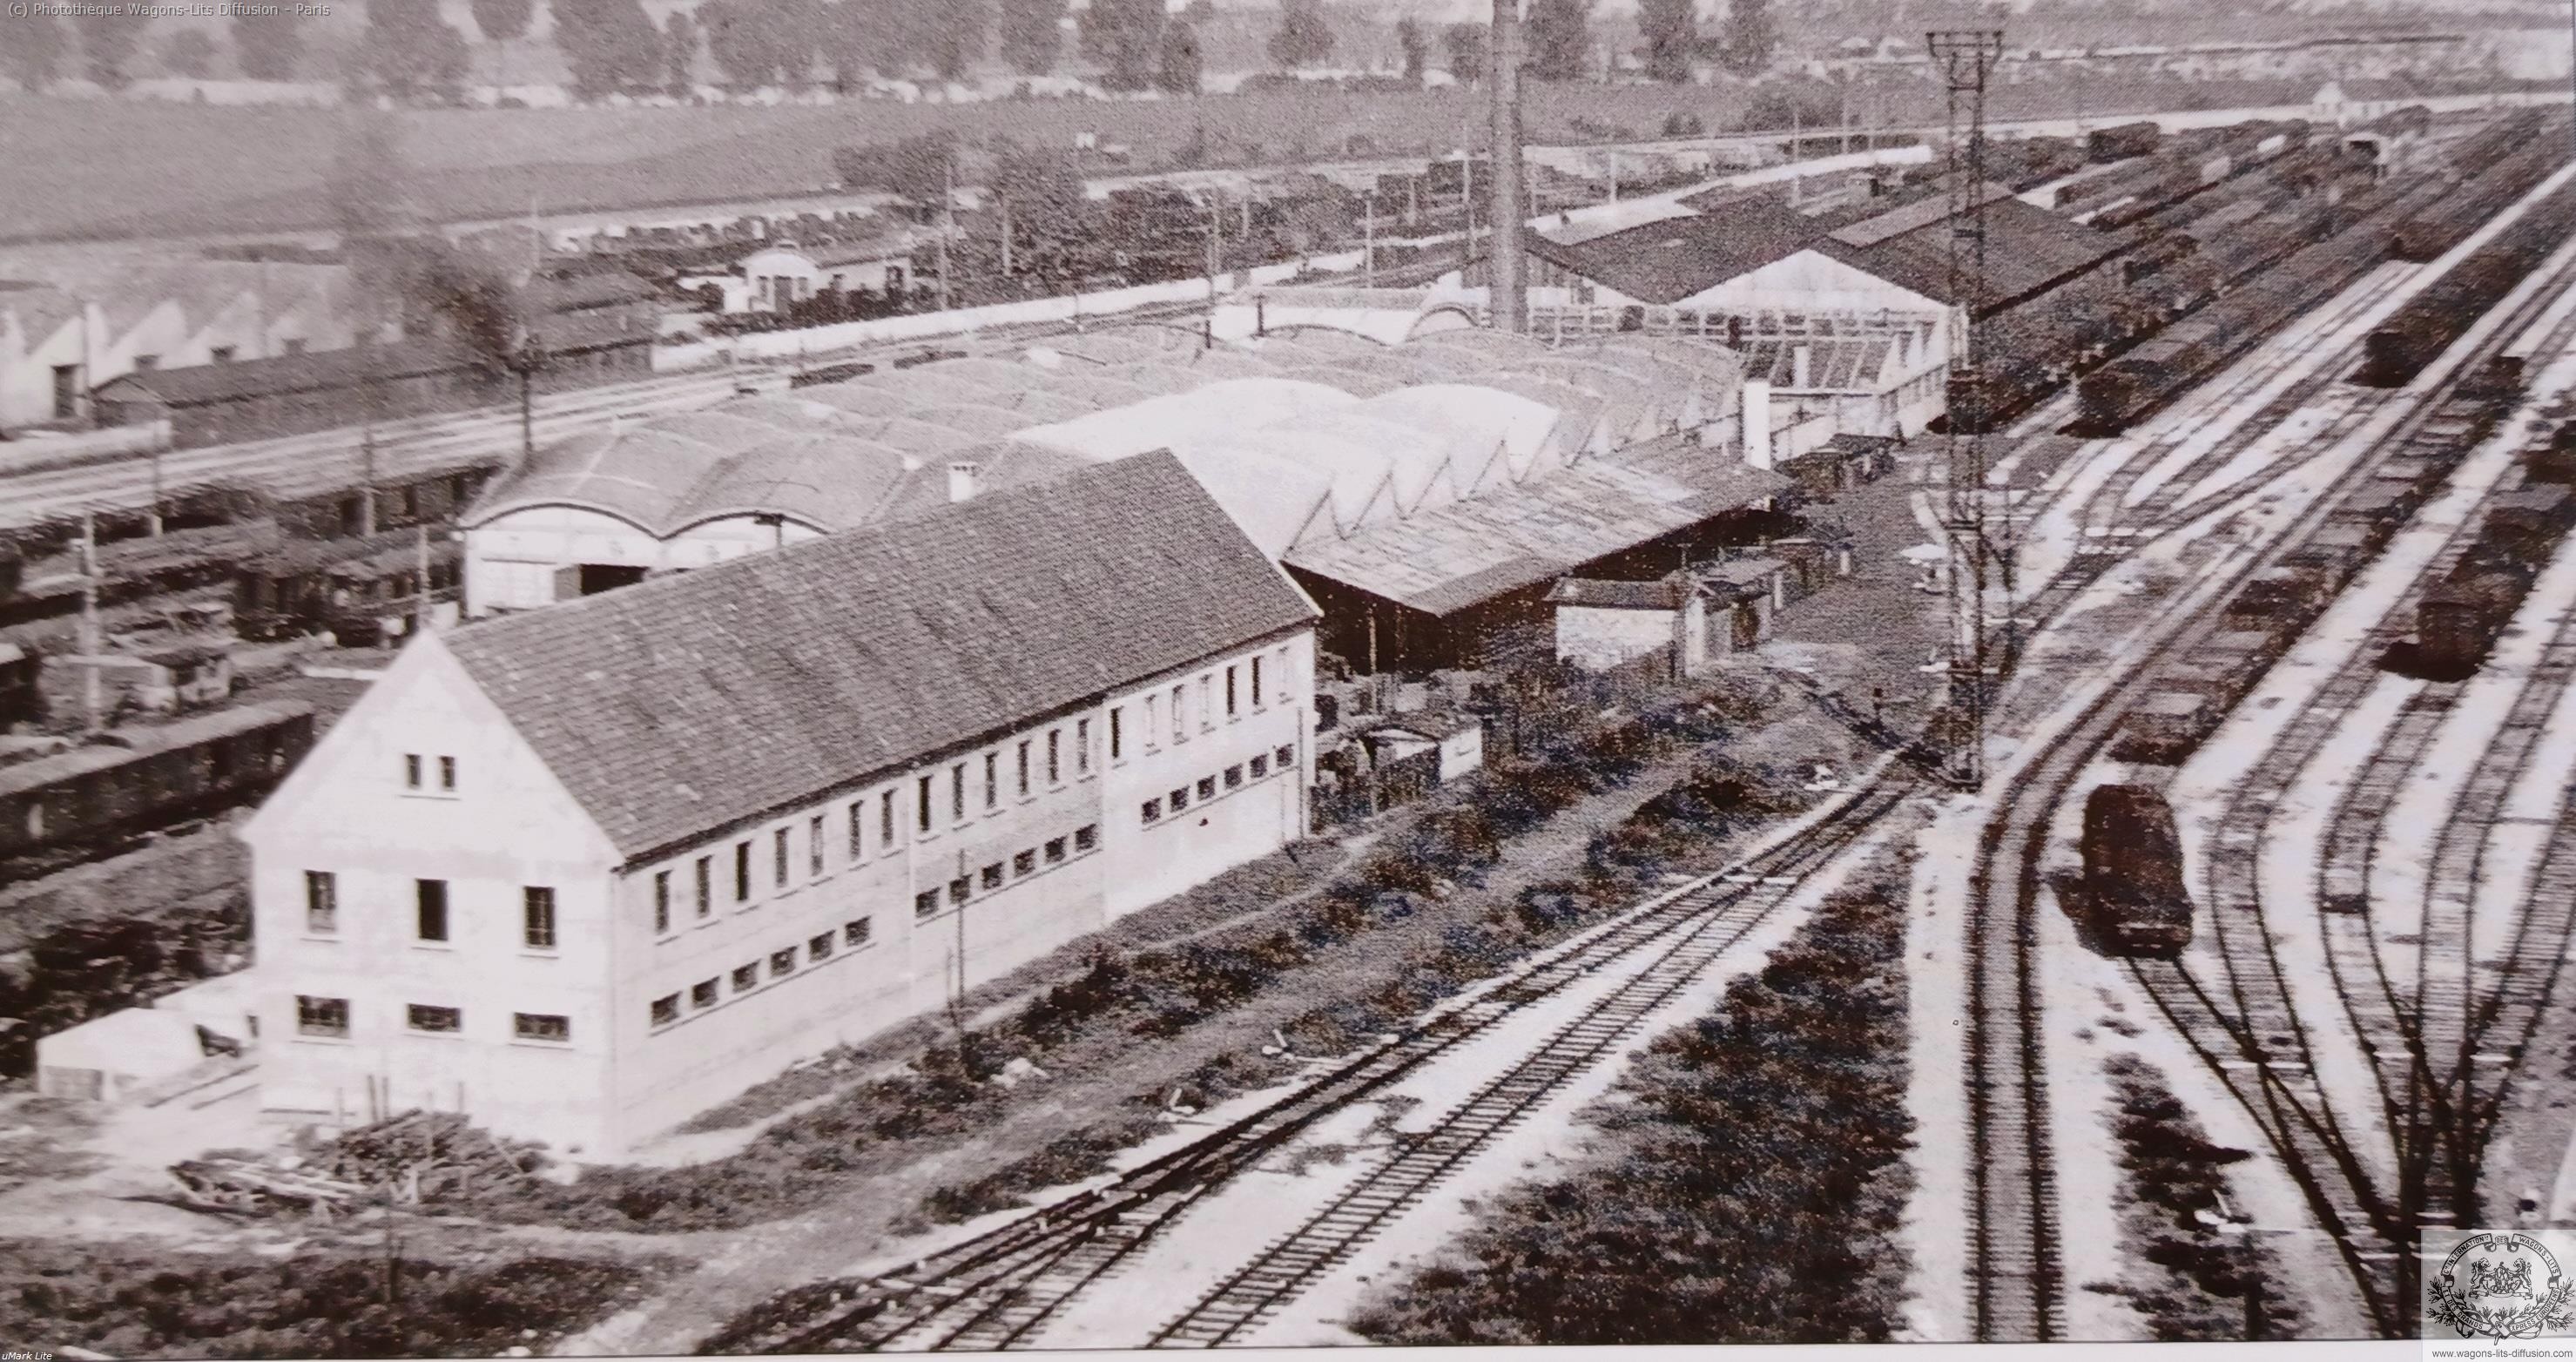 Wl ateliers villeneuve prairie en 1951